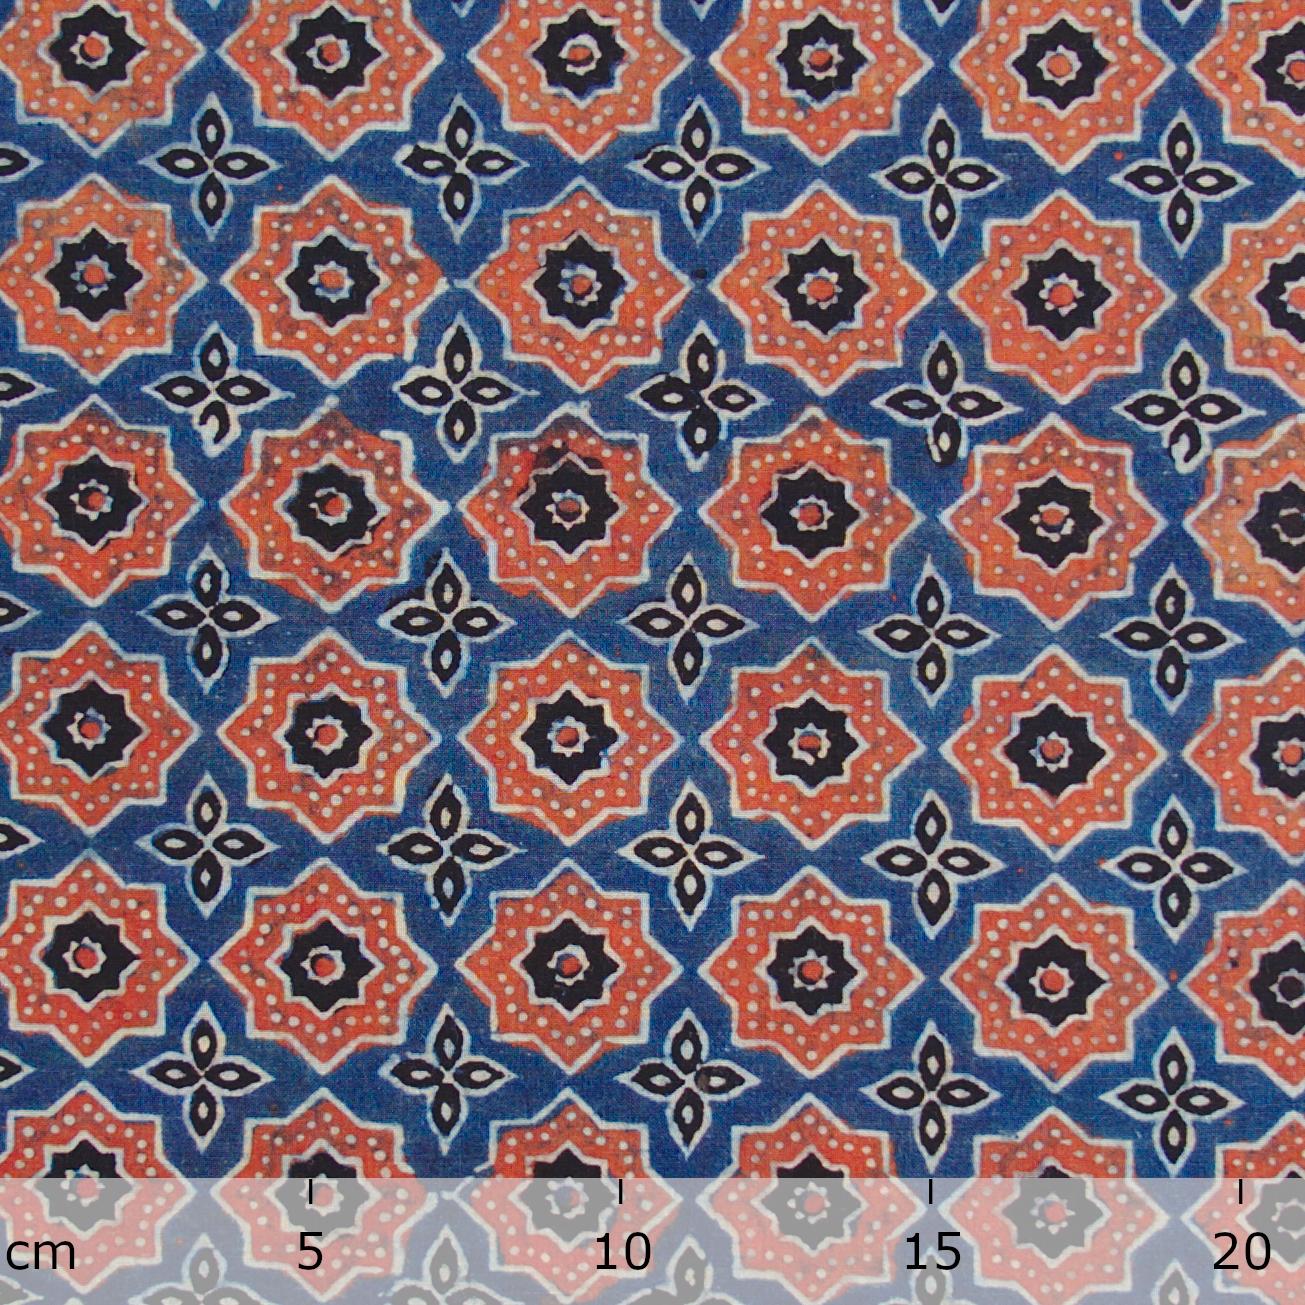 Block Printed Fabric, 100% Cotton, Ajrak Design: Blue Indigo Base, Red Madder Star. Ruler